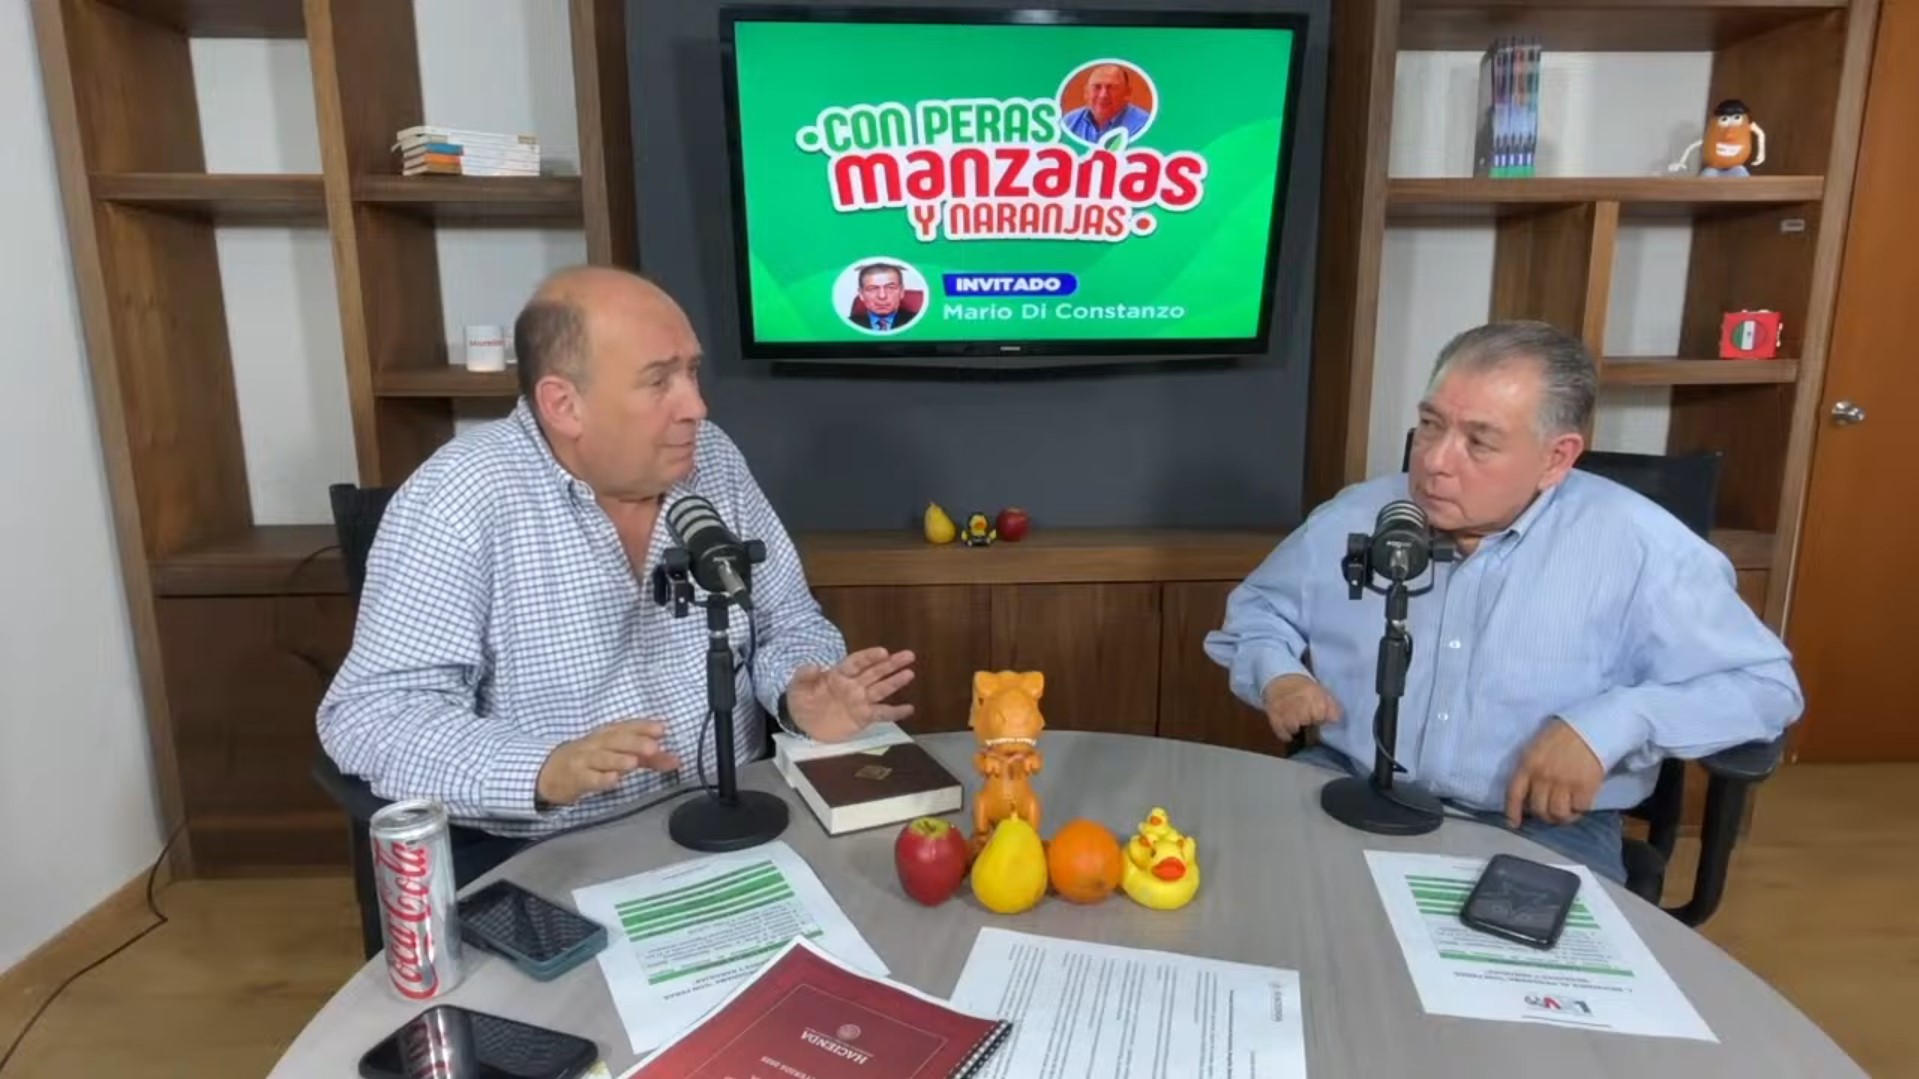 El exgobernador de Coahuila, Rubén Moreira discutió con el economista Mario Di Constanza. (ESPECIAL)